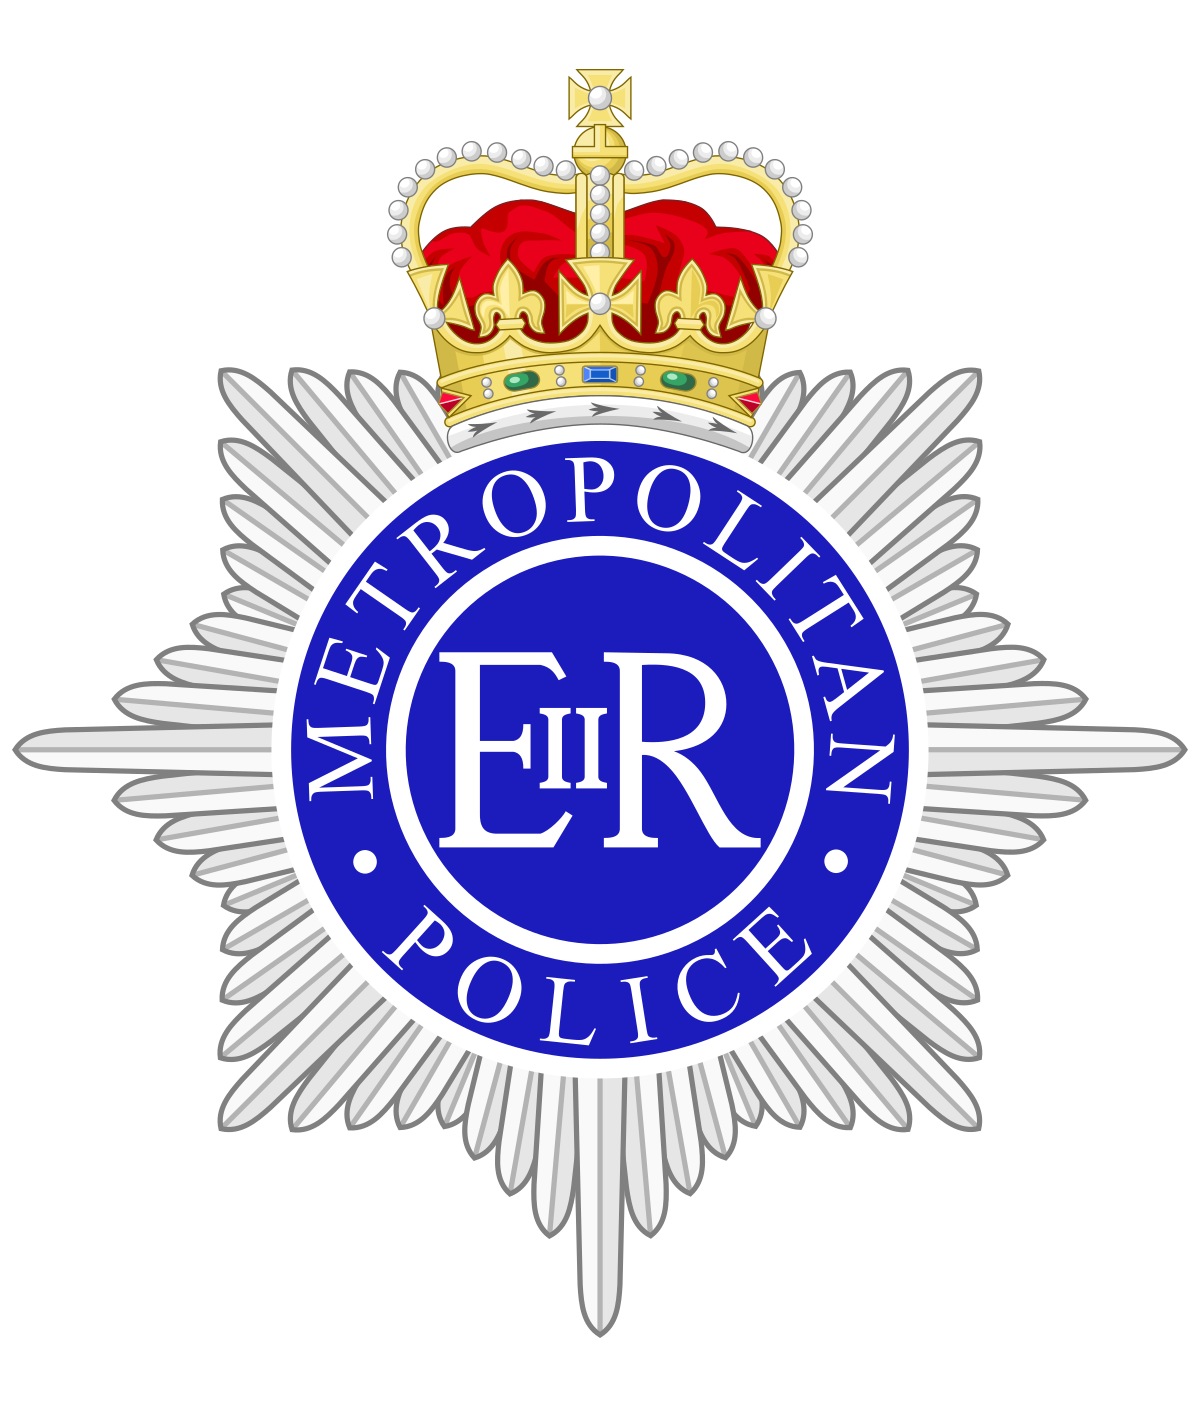 Metropolitan Police - Wikipedia